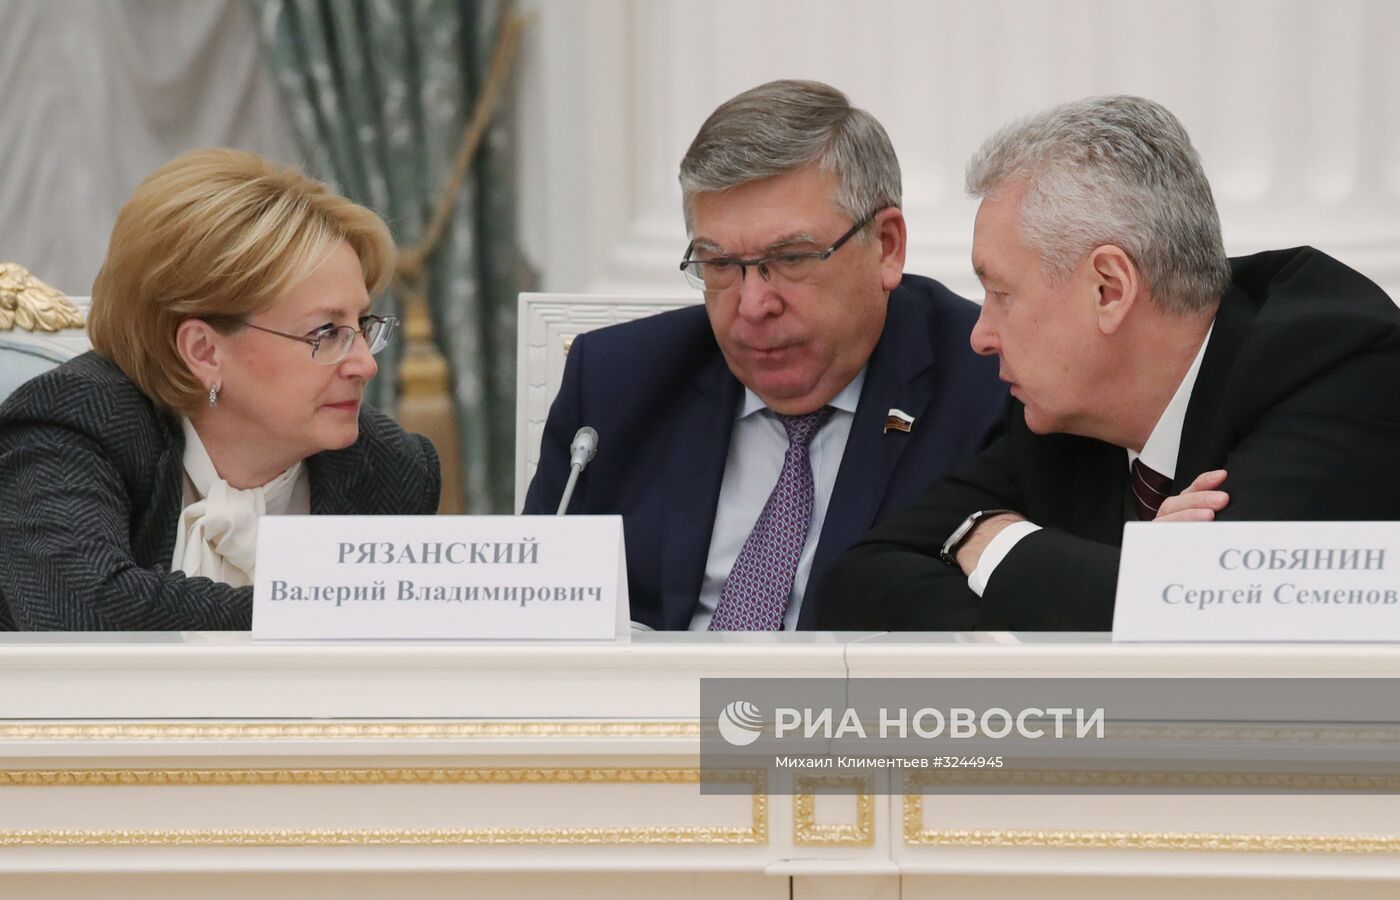 Президент РФ В. Путин провел заседание Координационного совета